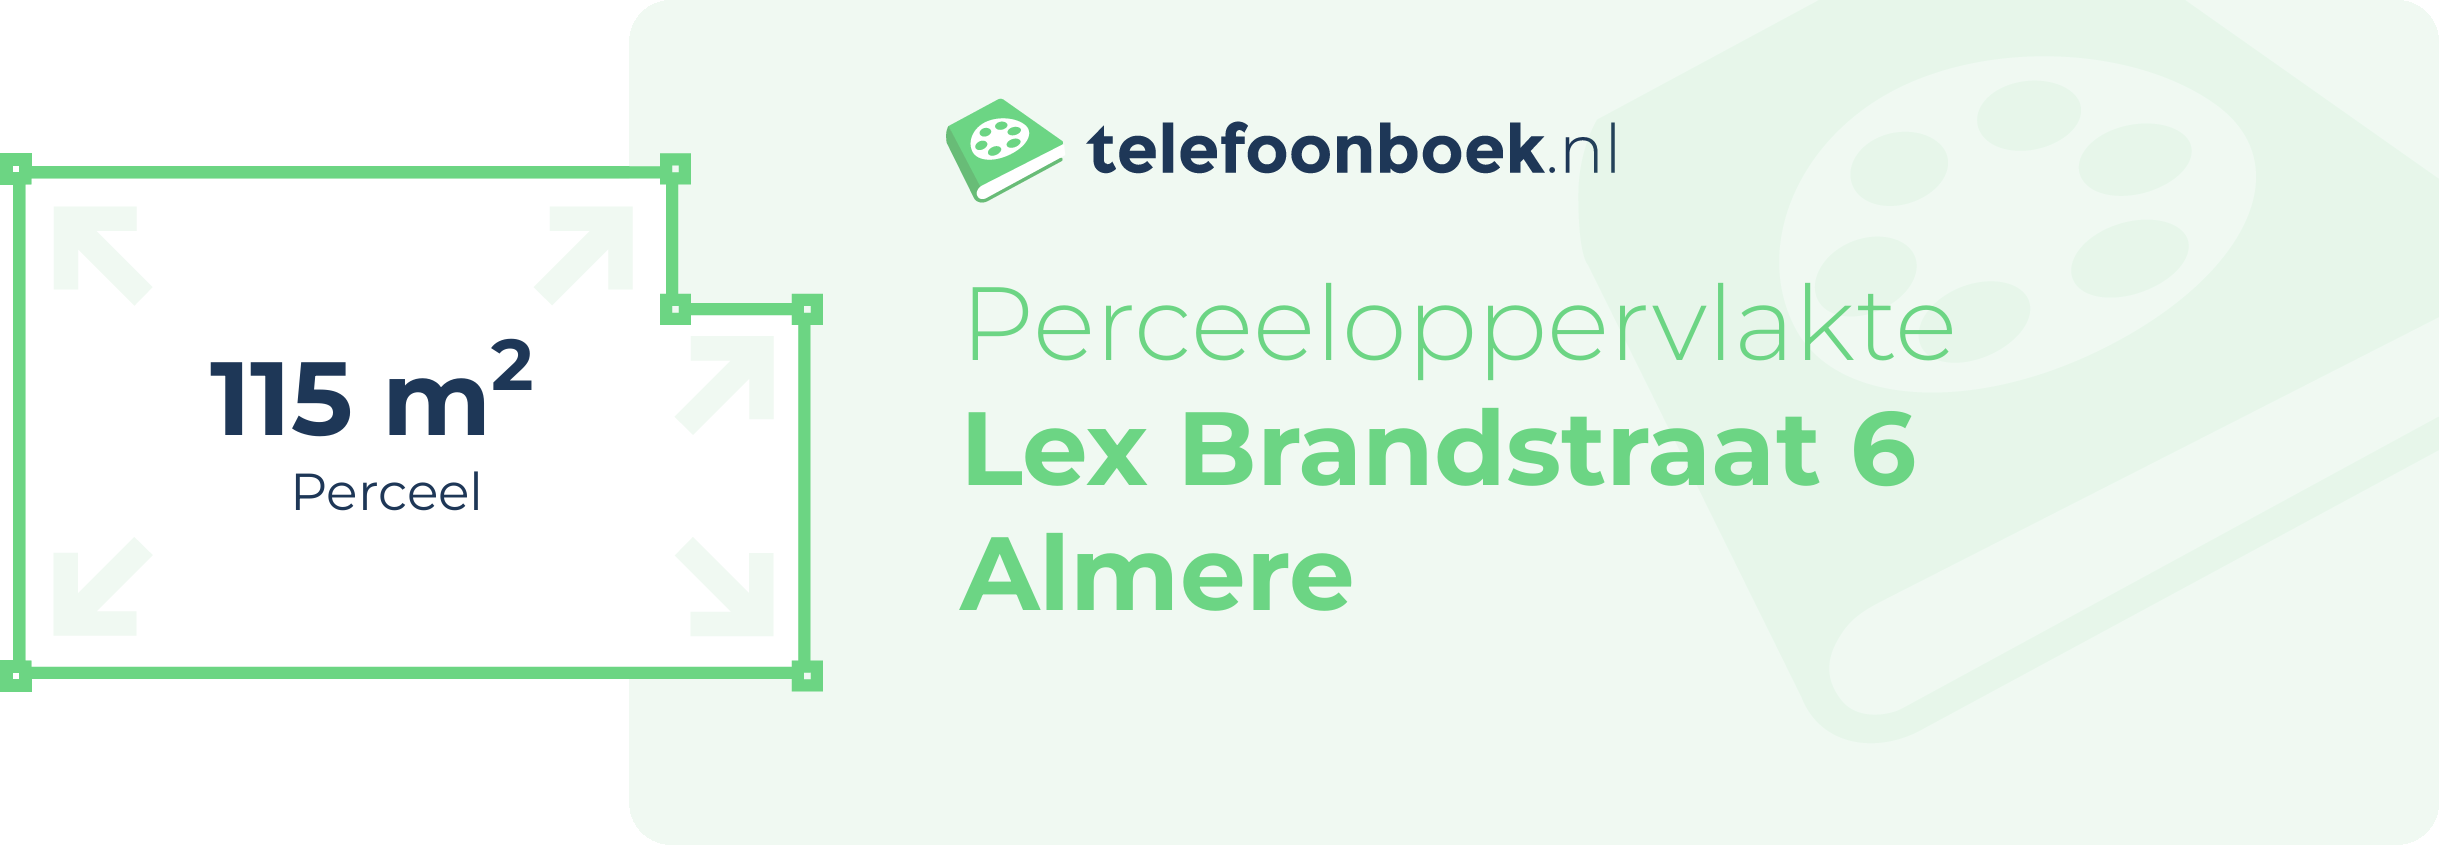 Perceeloppervlakte Lex Brandstraat 6 Almere